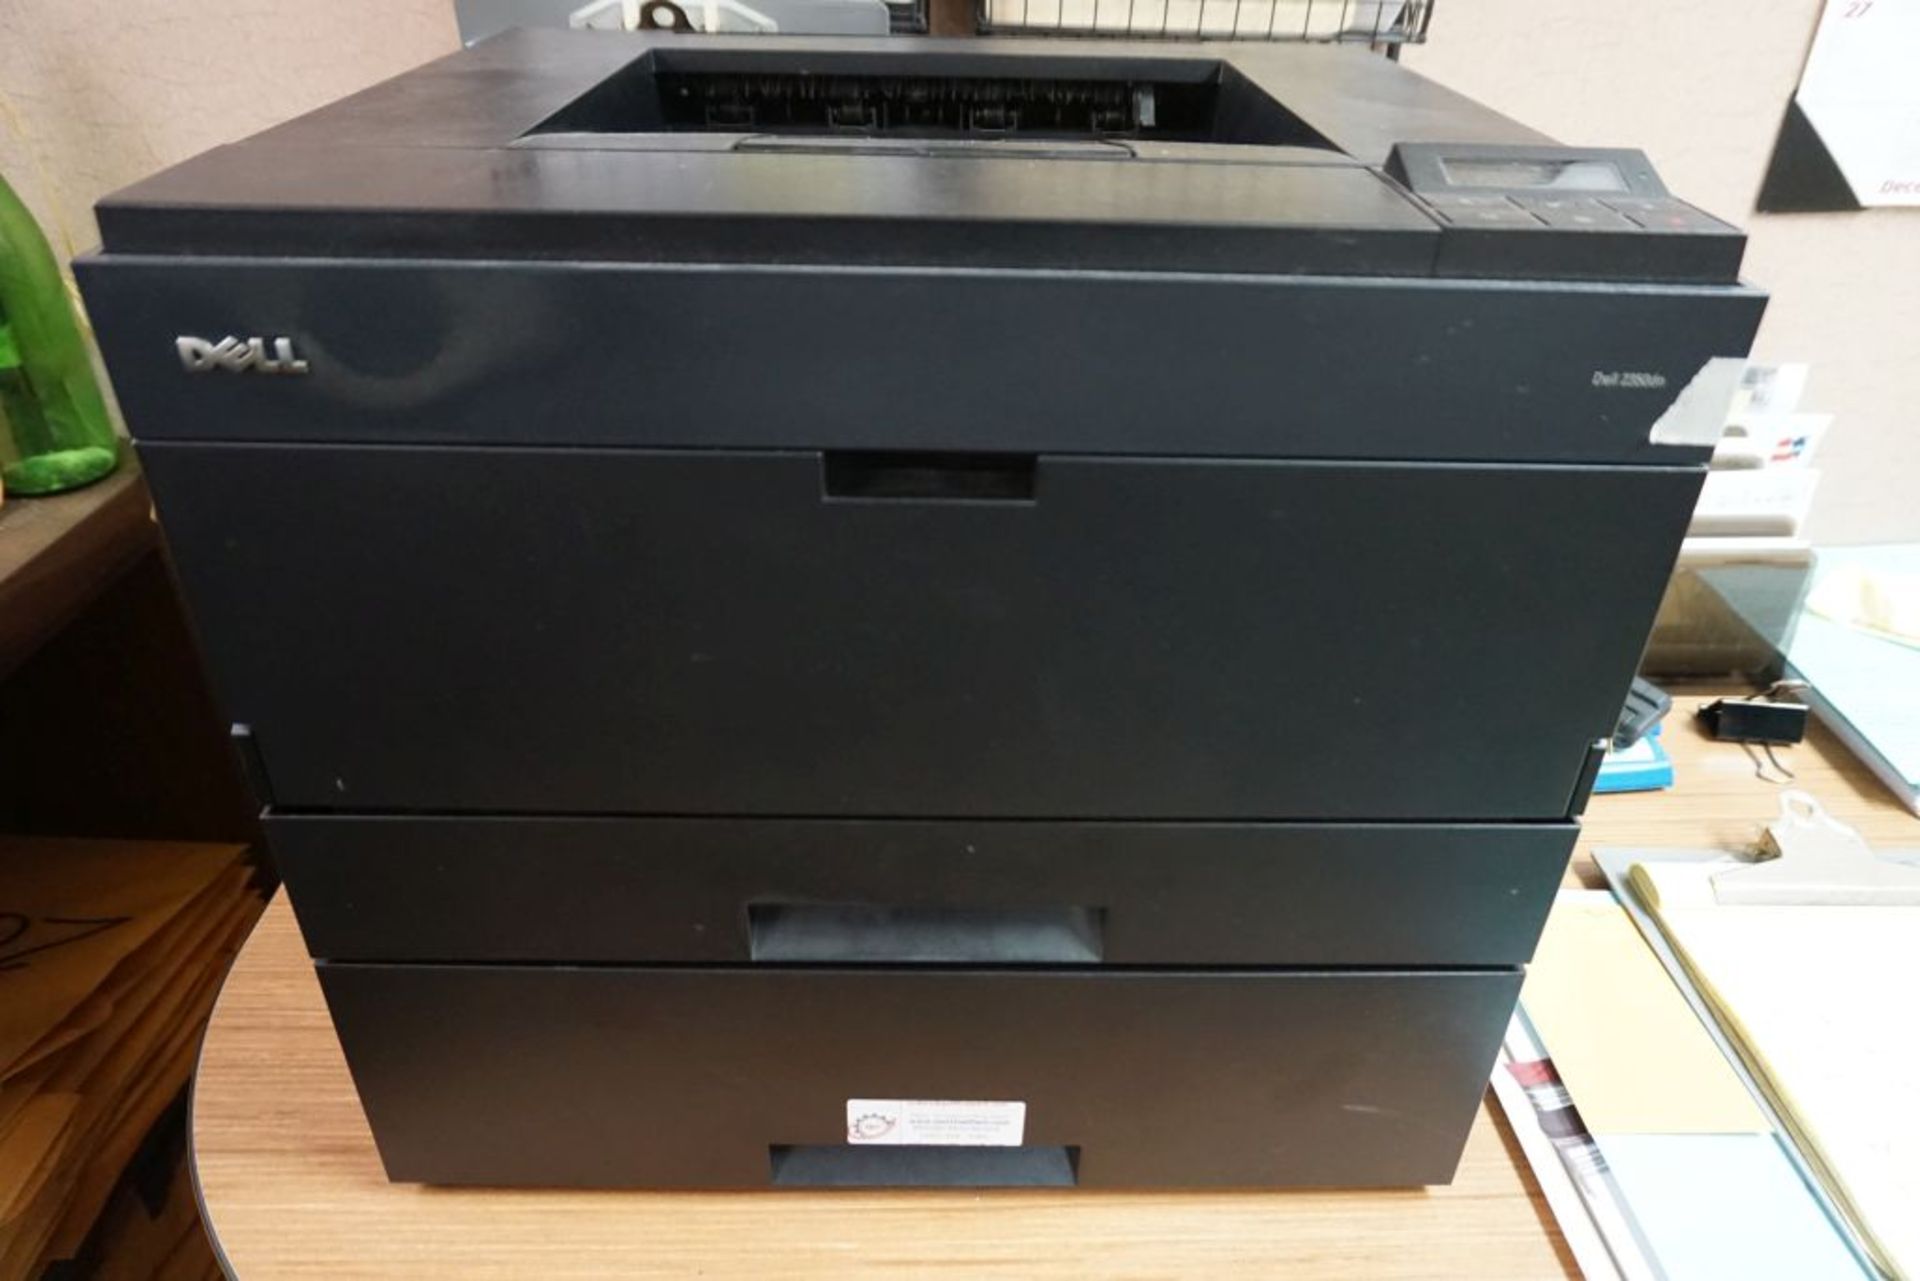 Double Tray Dell Printer | Model No. 2350dn - Image 3 of 7